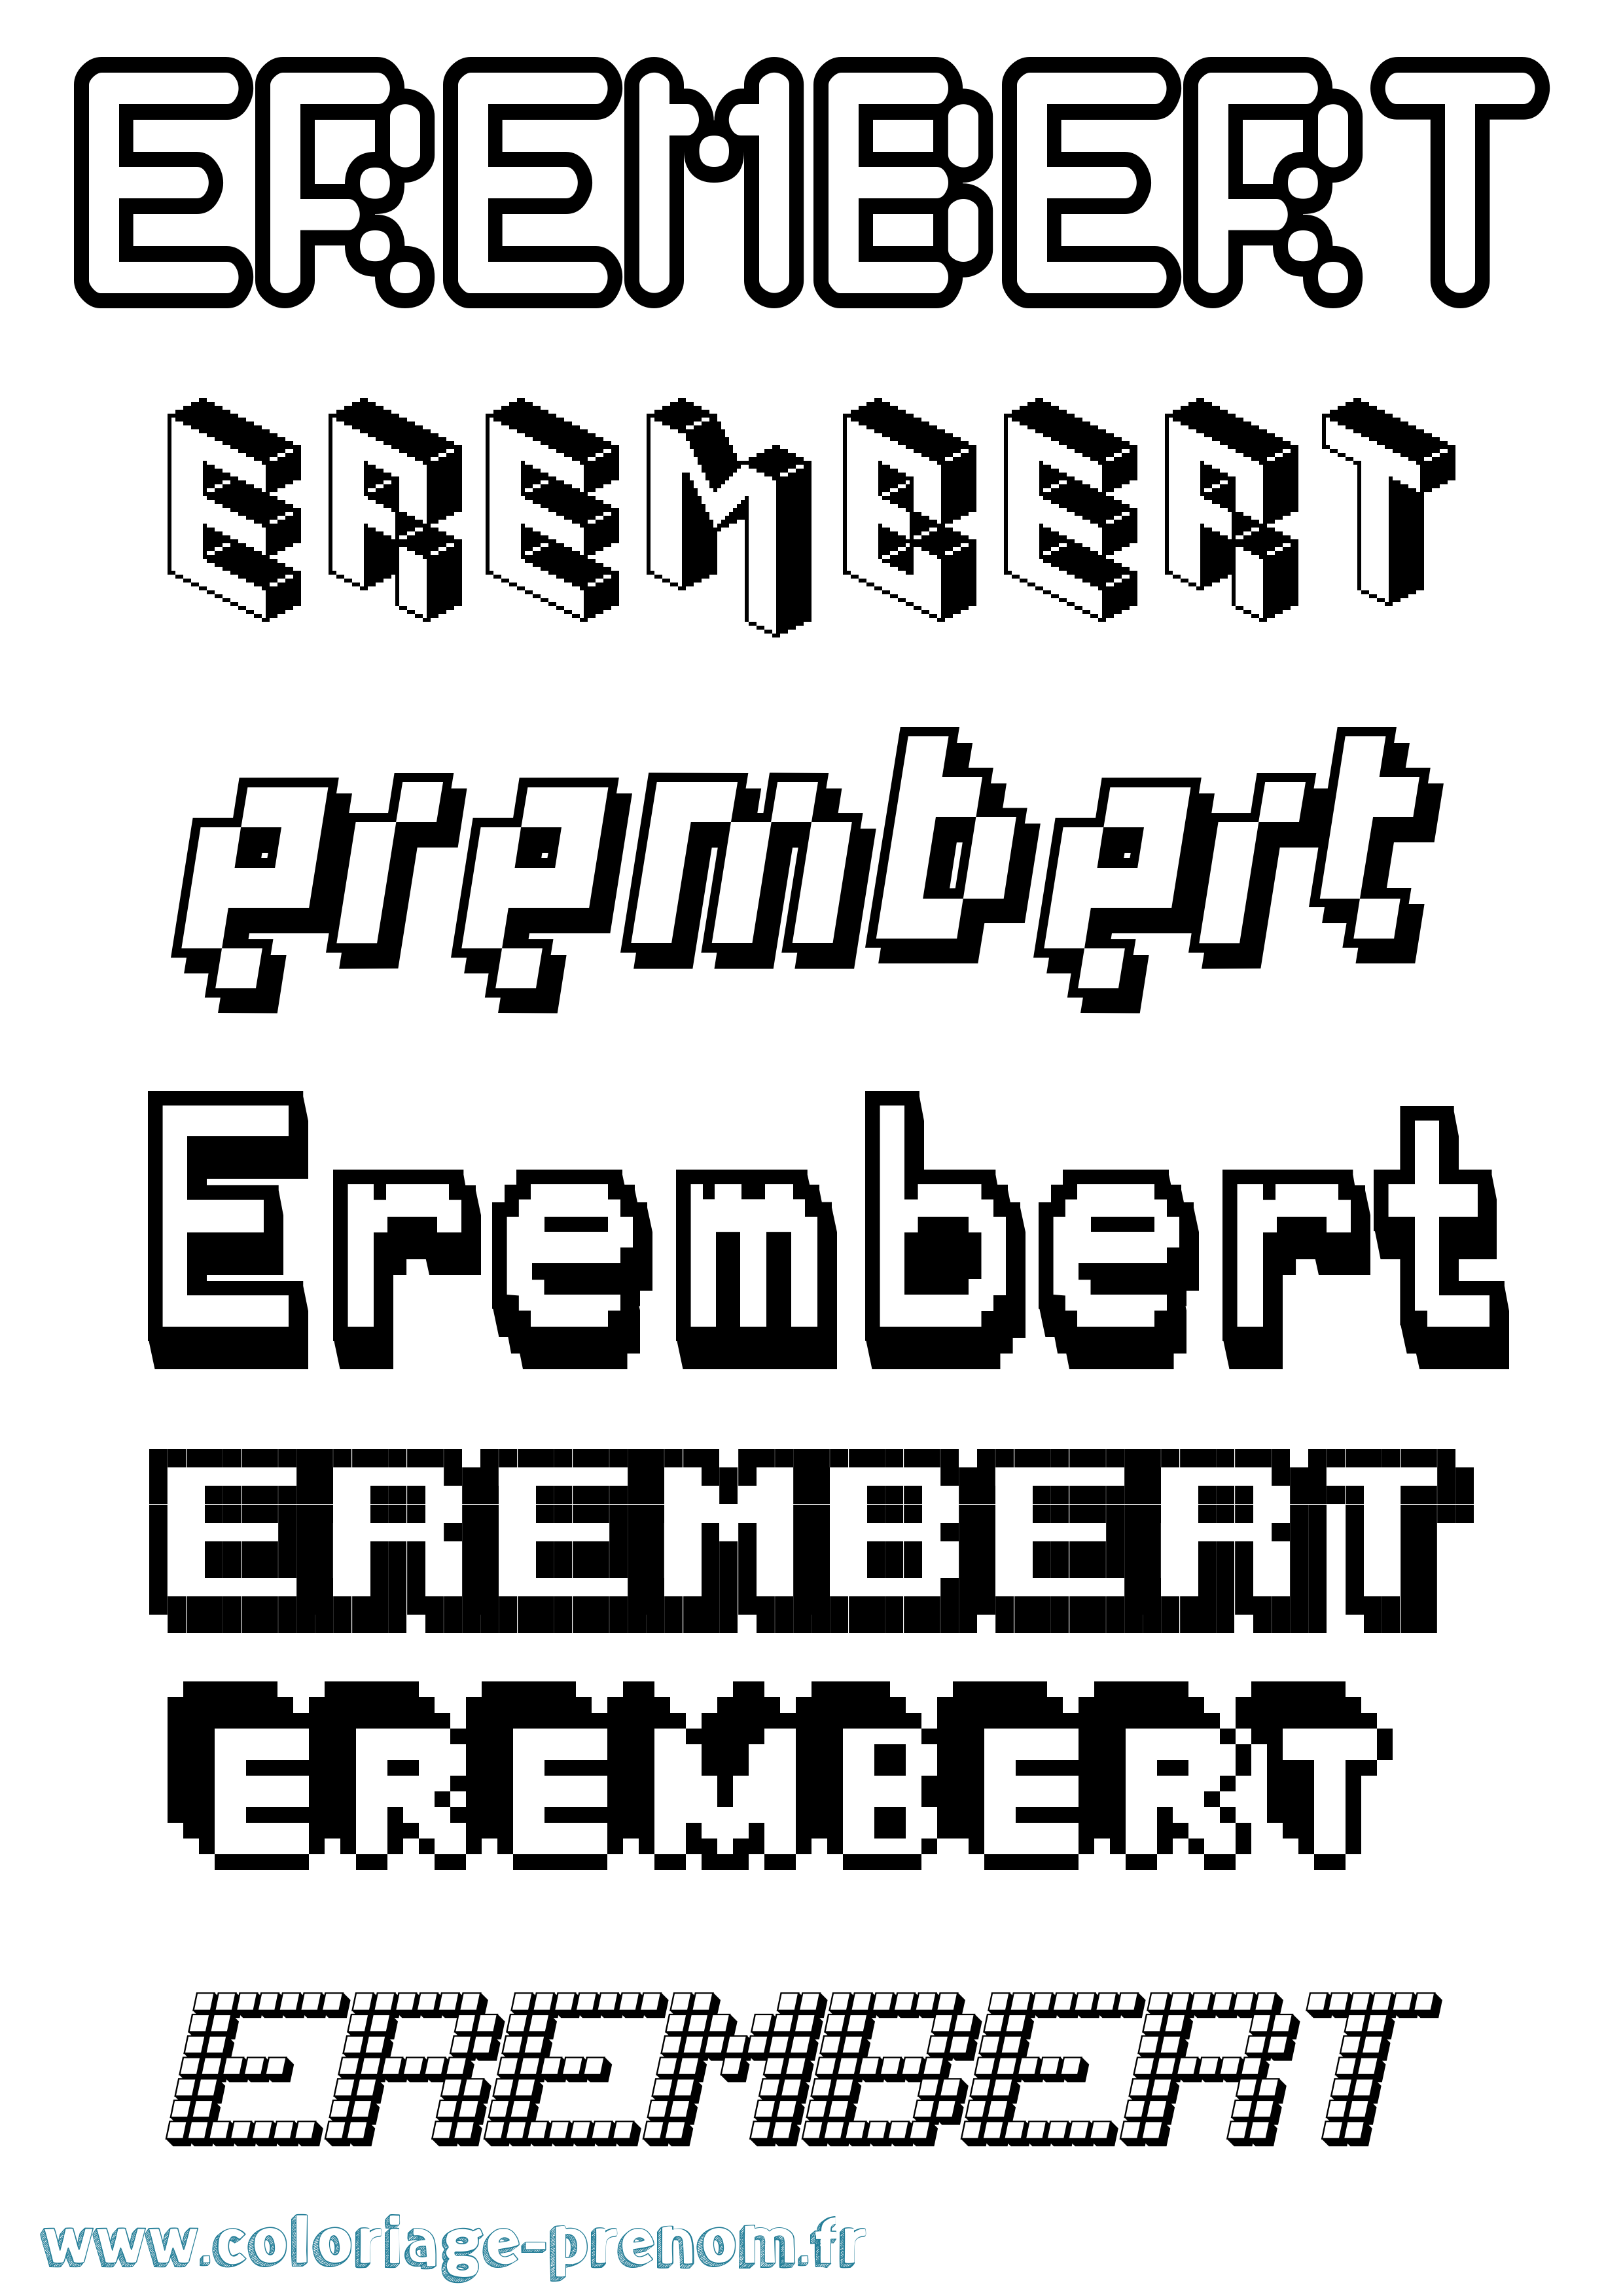 Coloriage prénom Erembert Pixel